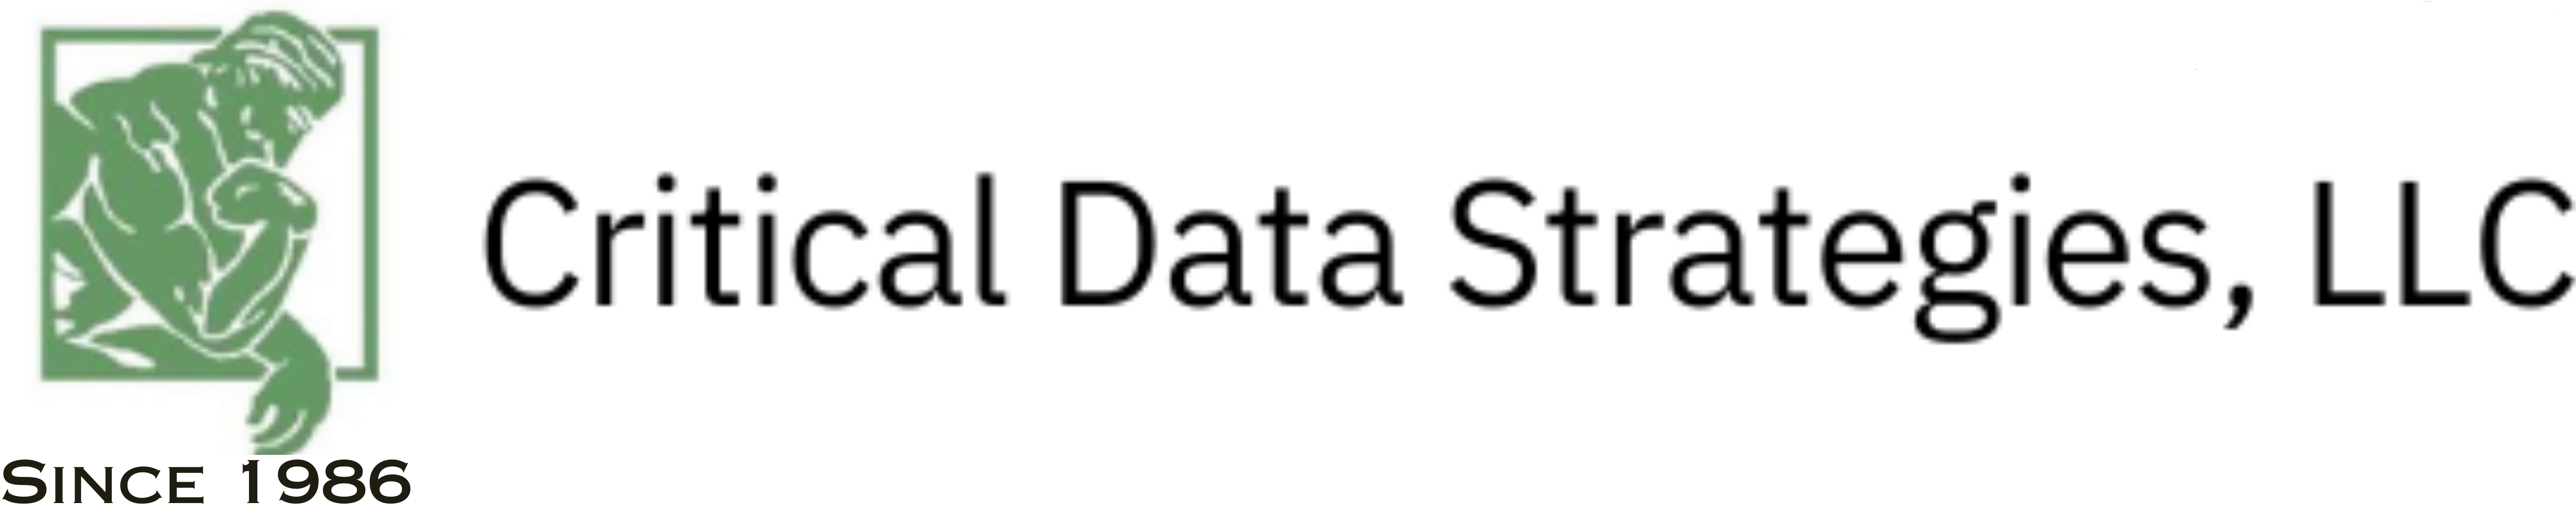 Critical Data Strategies, LLC